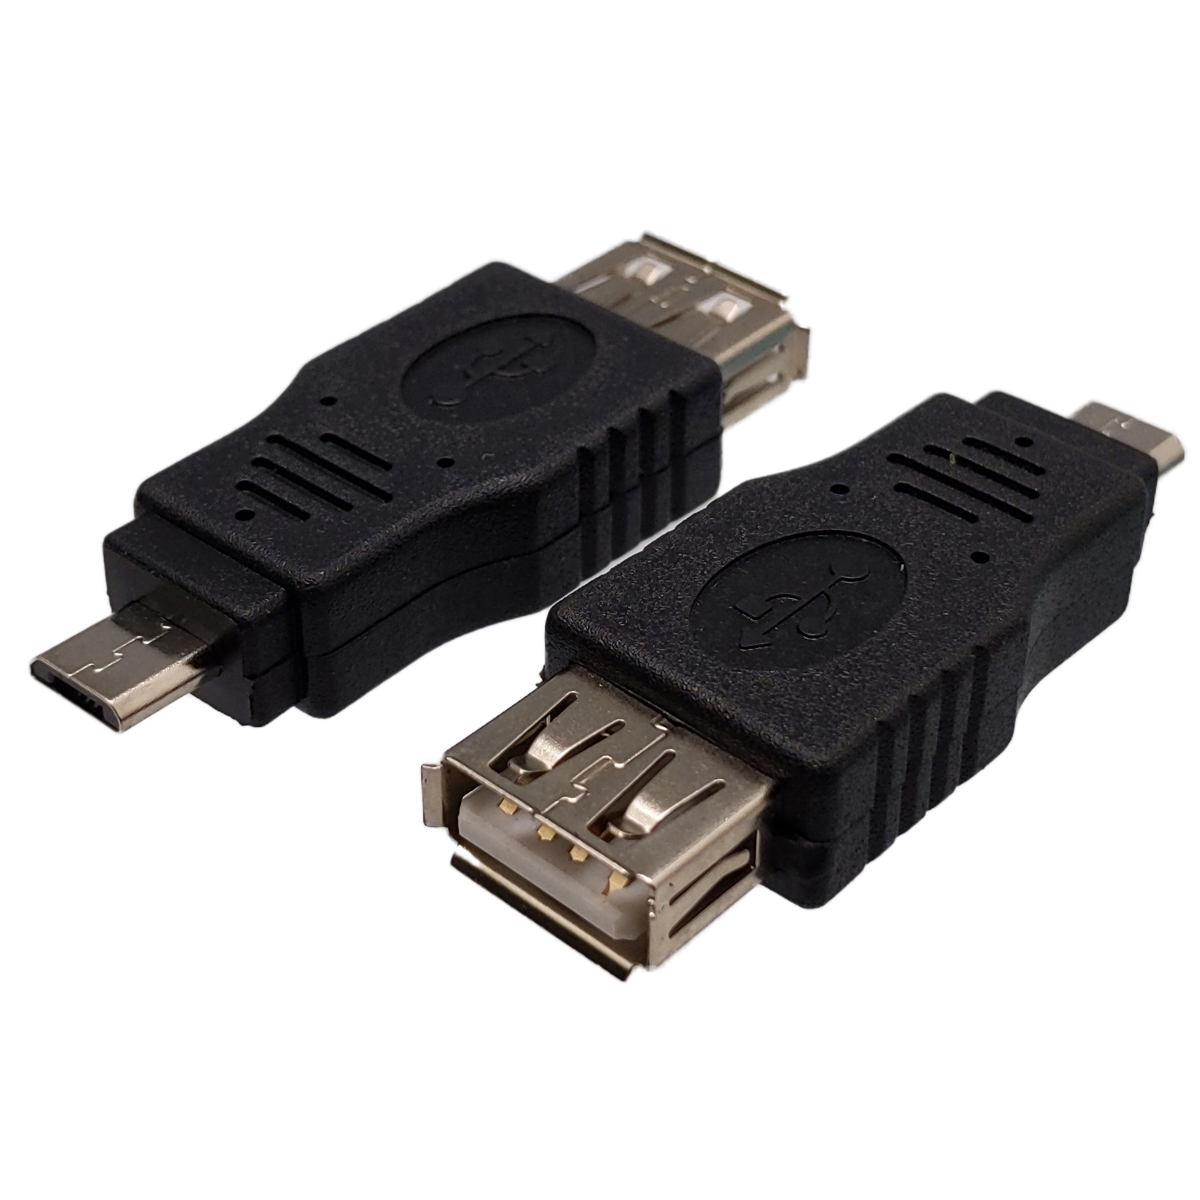 USB A FEMALE TO MICRO USB, OTG CONNECTOR